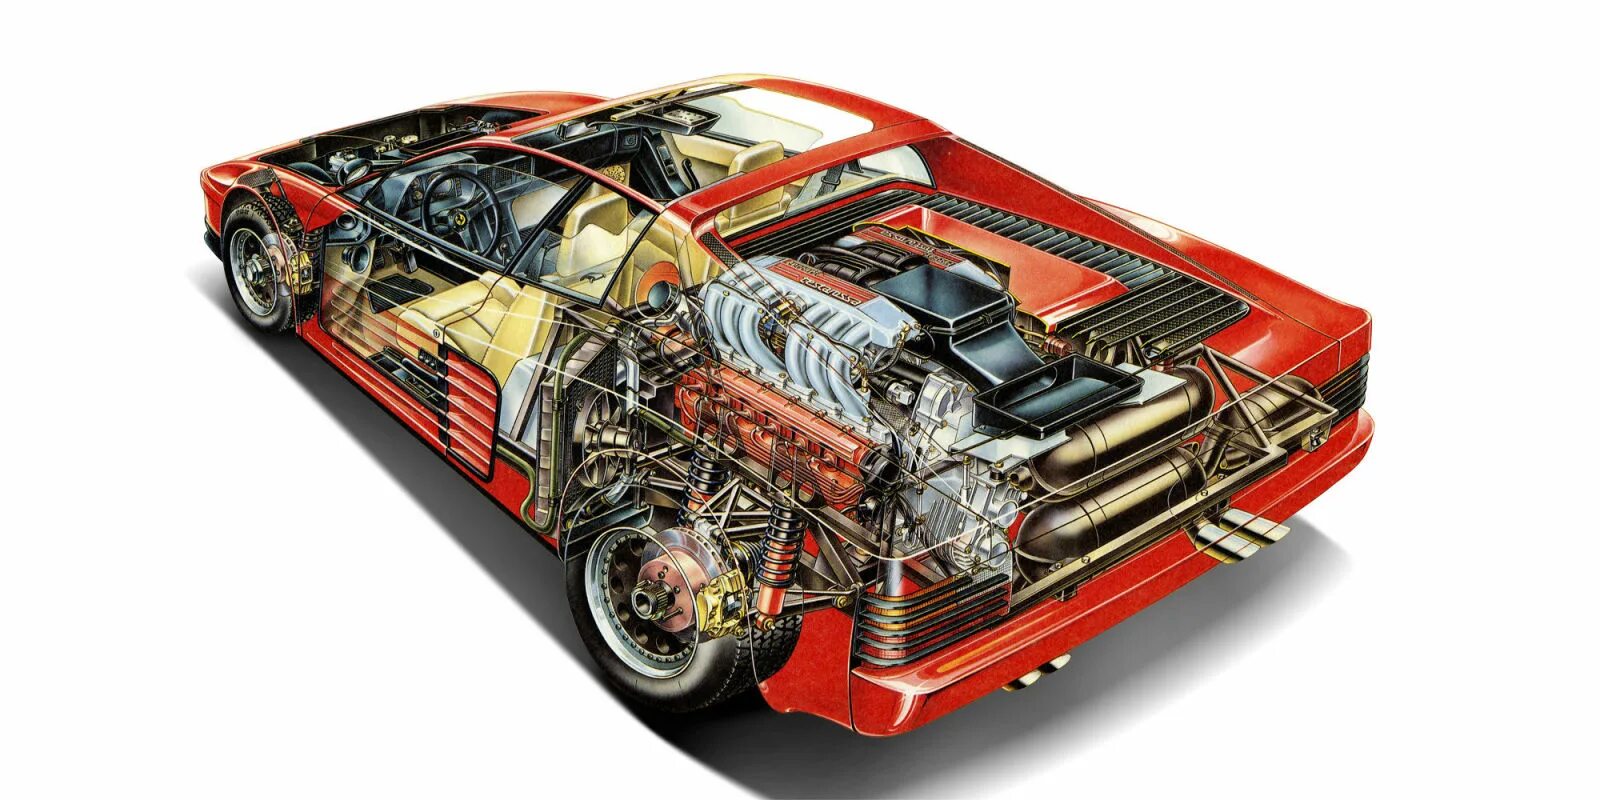 Ferrari Testarossa 1985. Феррари ф40 аэродинамика. Ferrari Testarossa 2022. Ferrari Testarossa коробка передач. Структура двигателя автомобиля